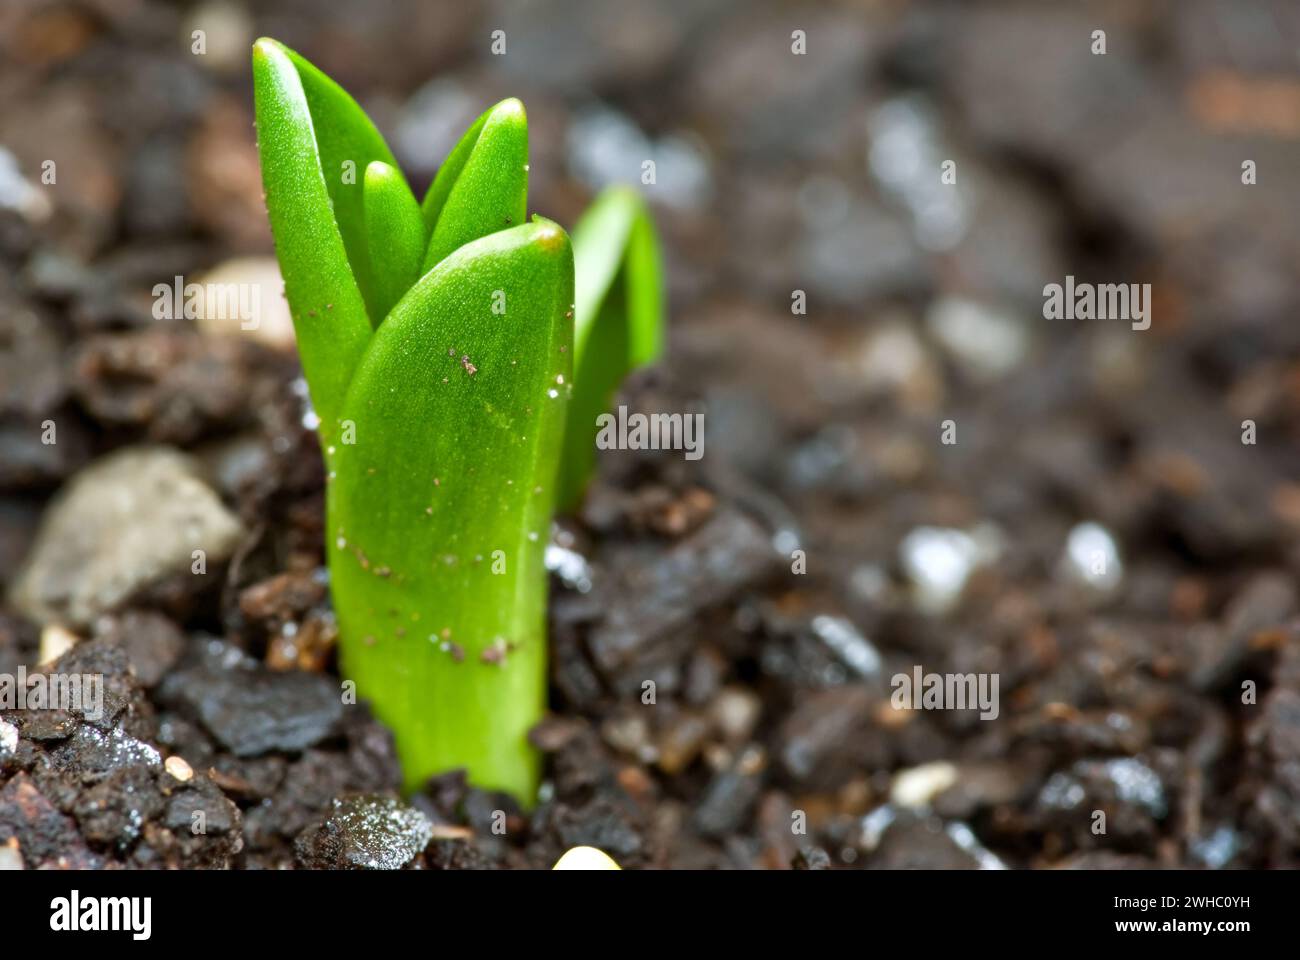 Little shoot of plant Stock Photo